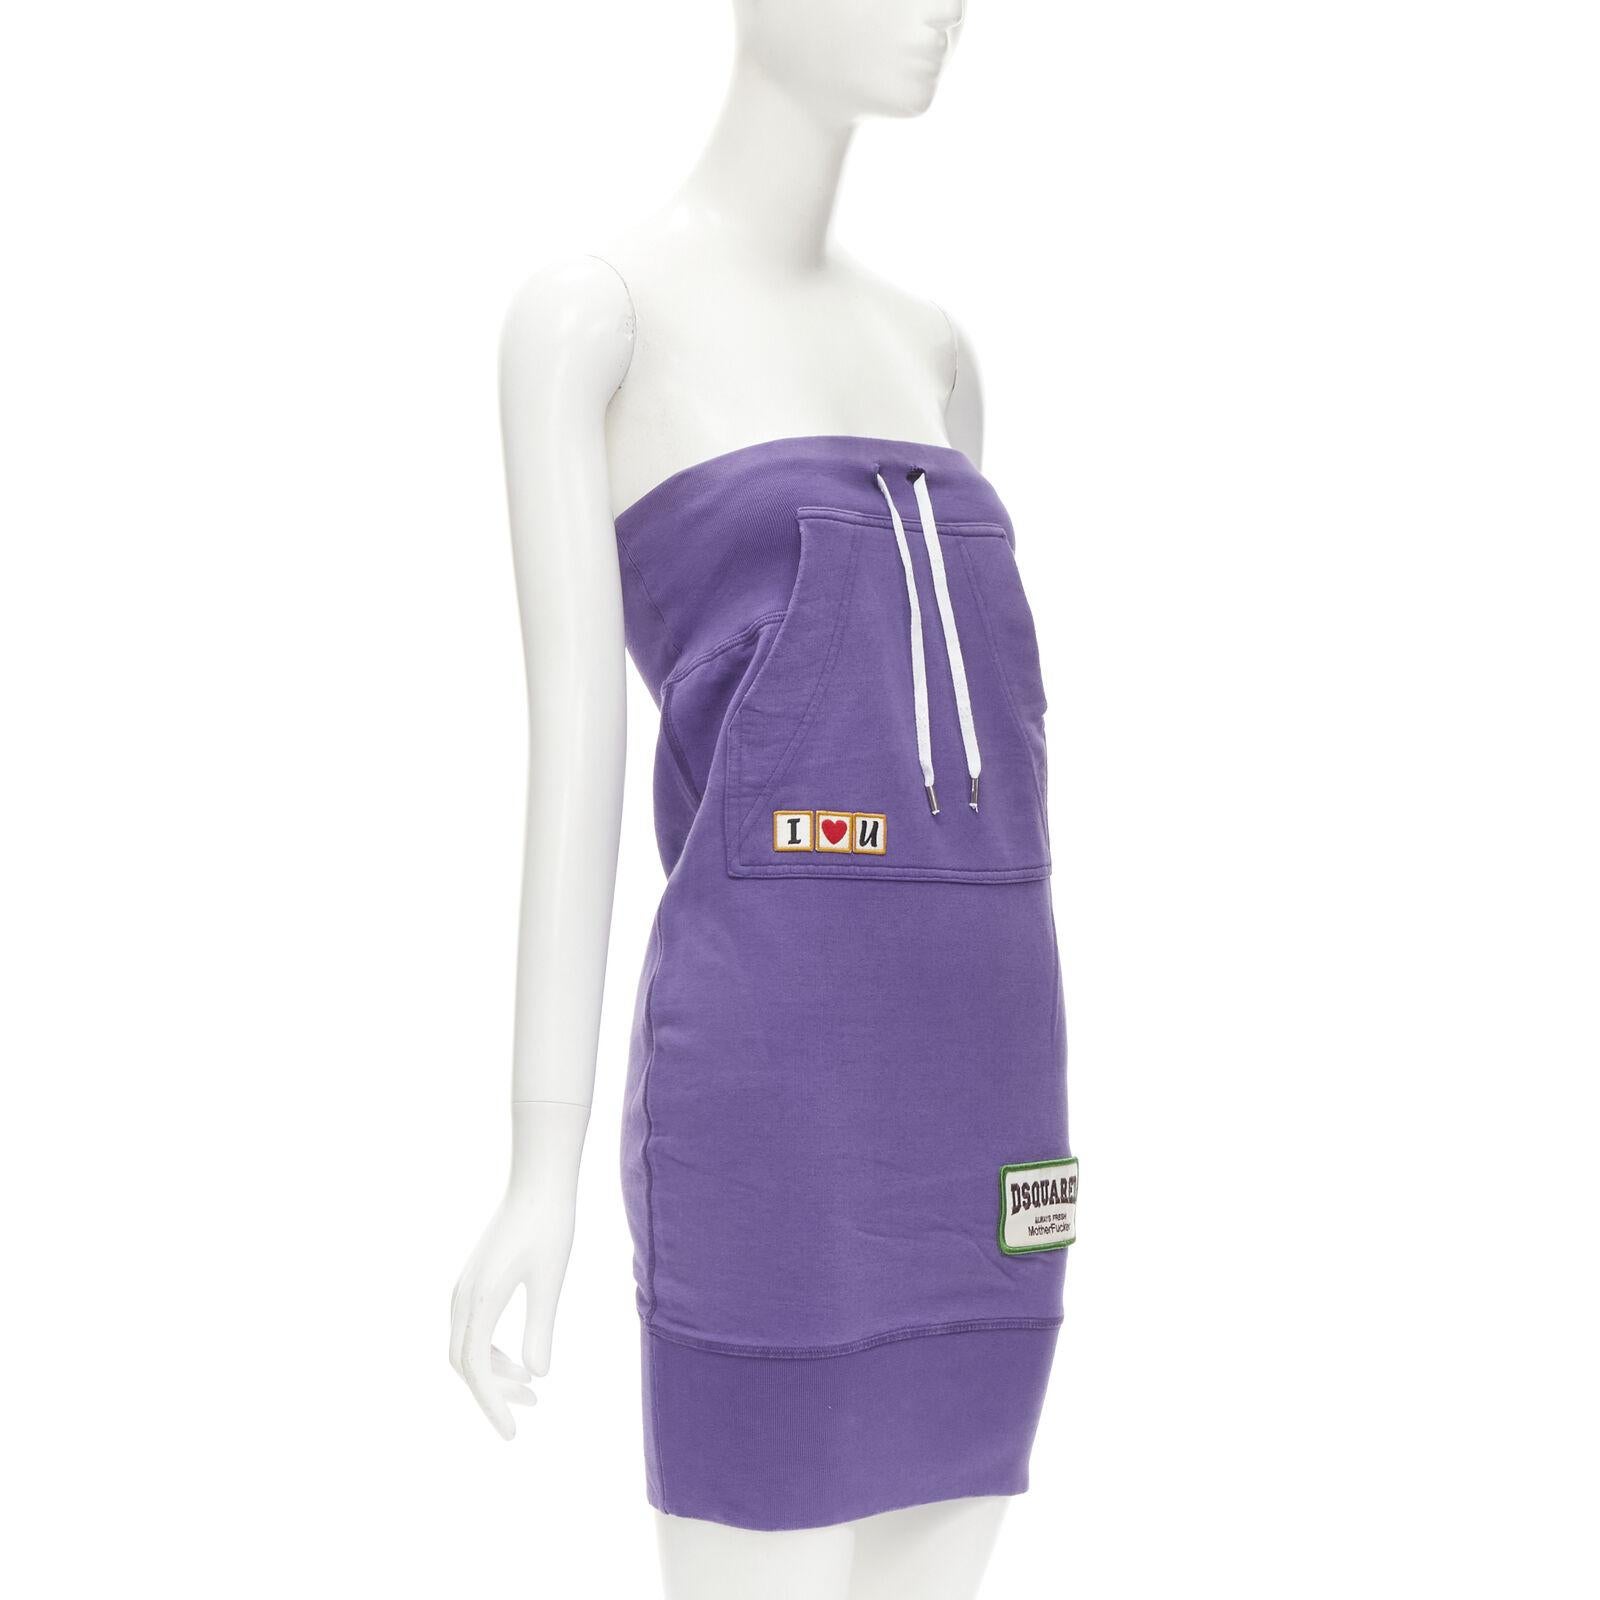 Robe sans bretelles DSQUARED Vintage Runway Y2K en coton violet I Love U MotherFker S Excellent état - En vente à Hong Kong, NT